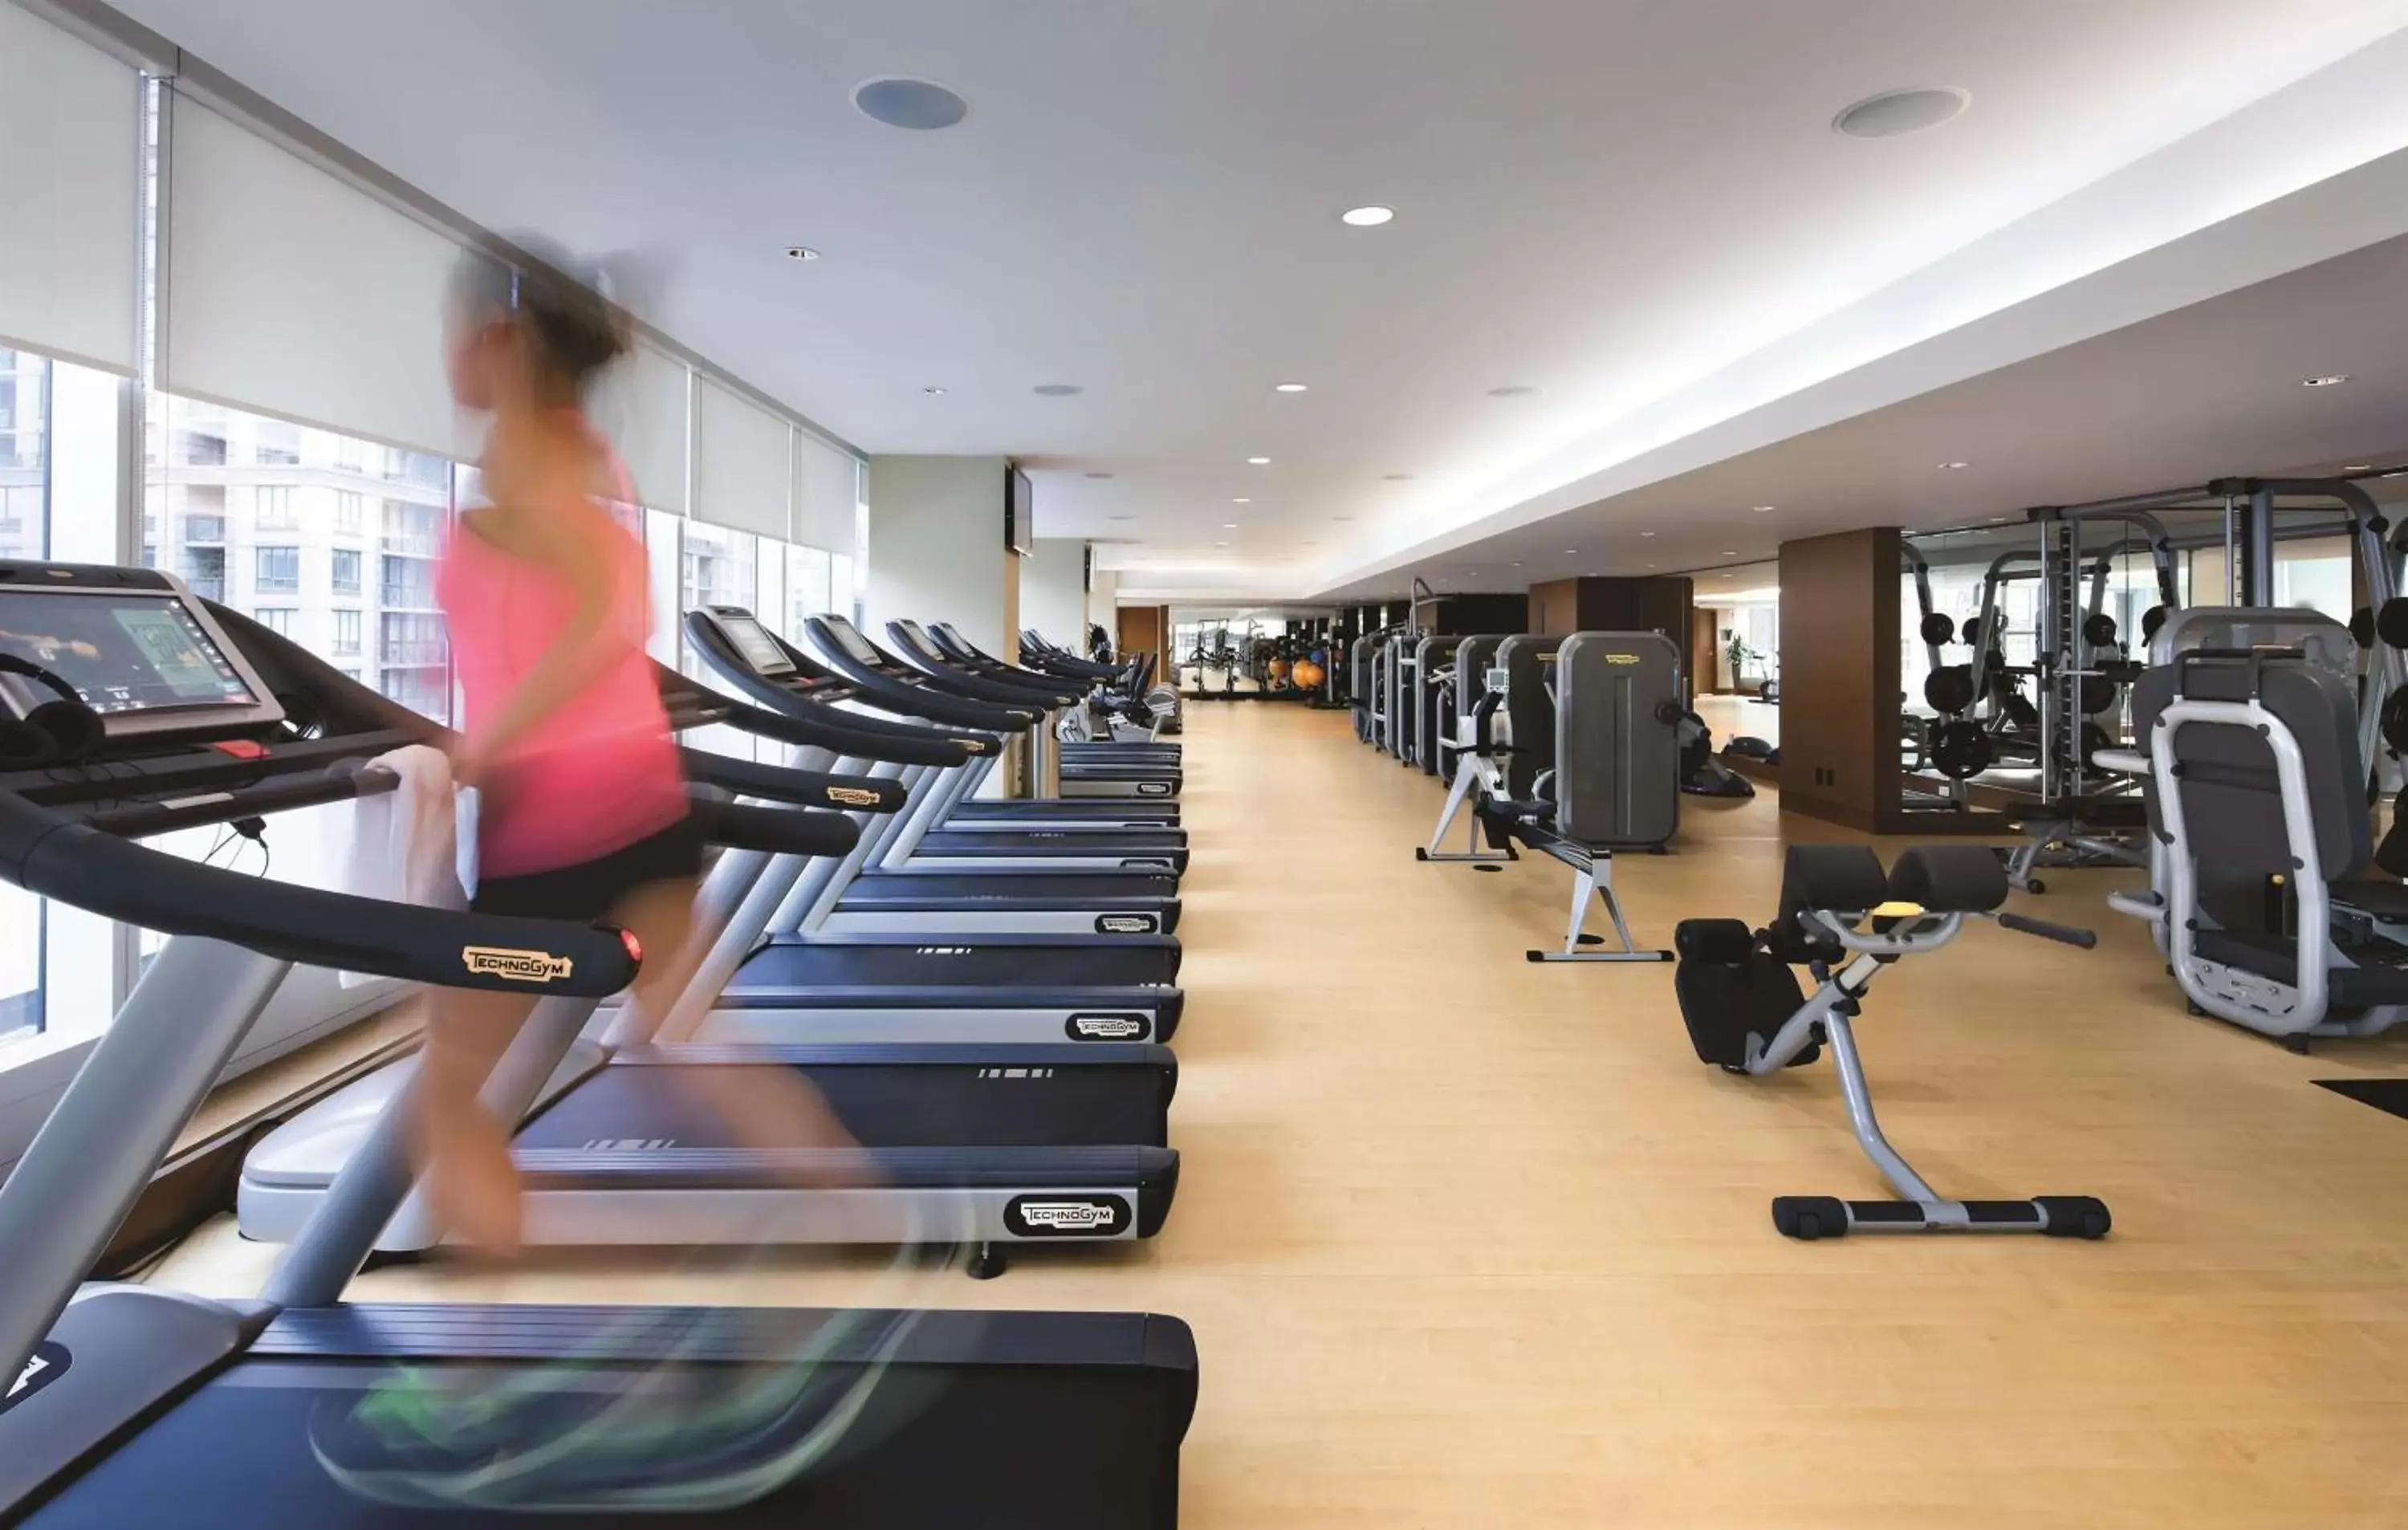 Fitness centre/facilities, Fitness Center/Facilities in Shangri-La Toronto